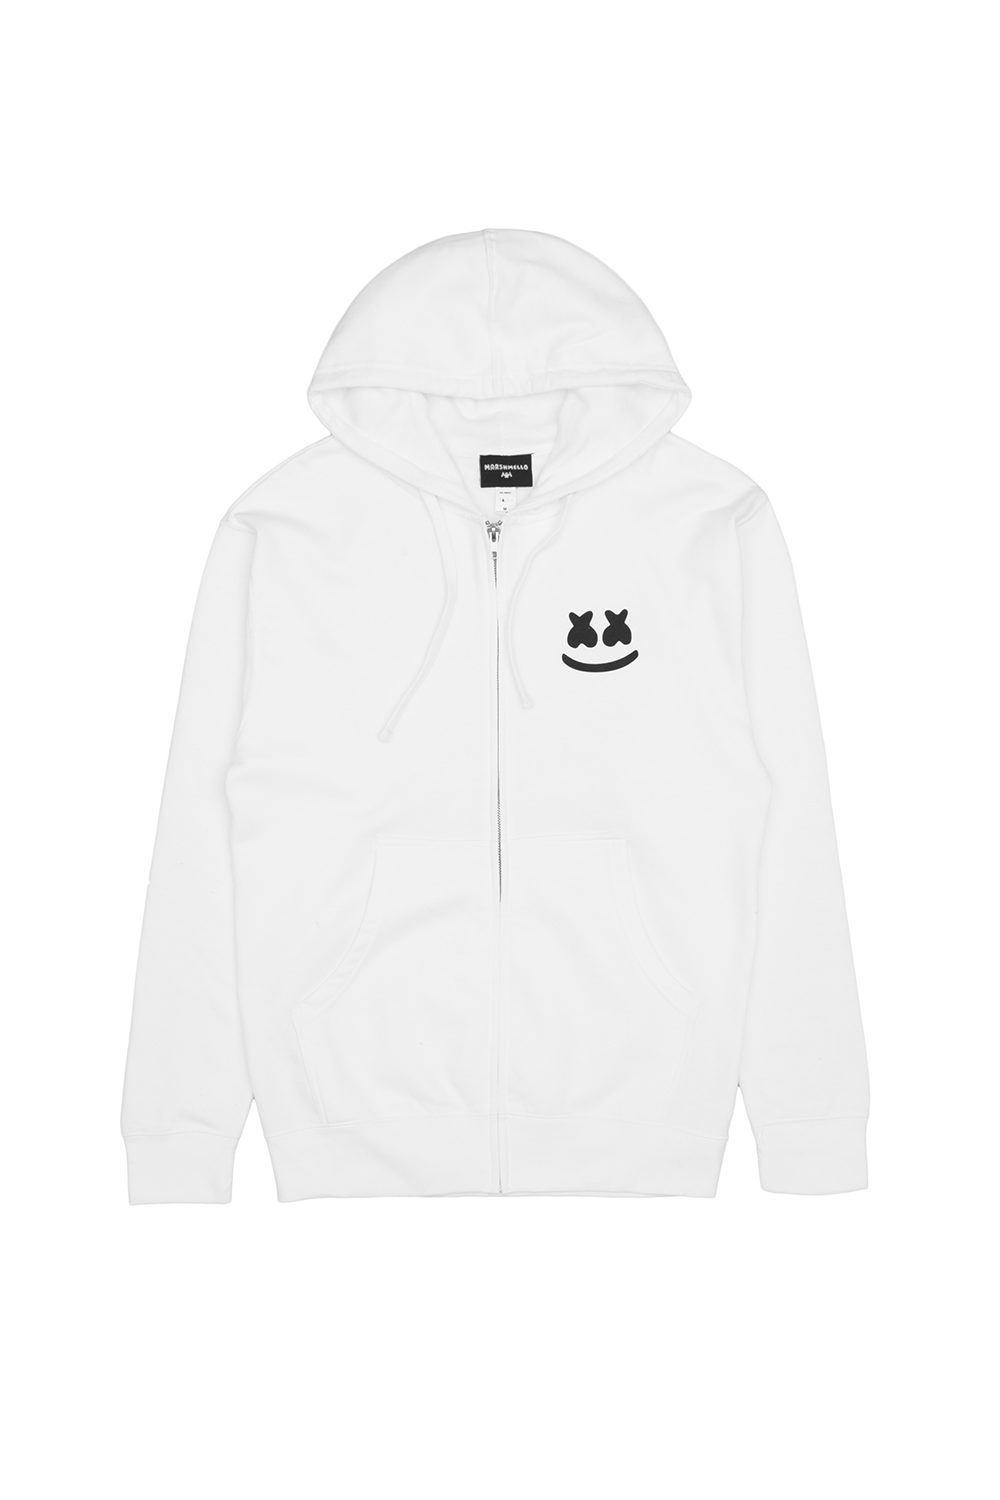 marshmello merch hoodie